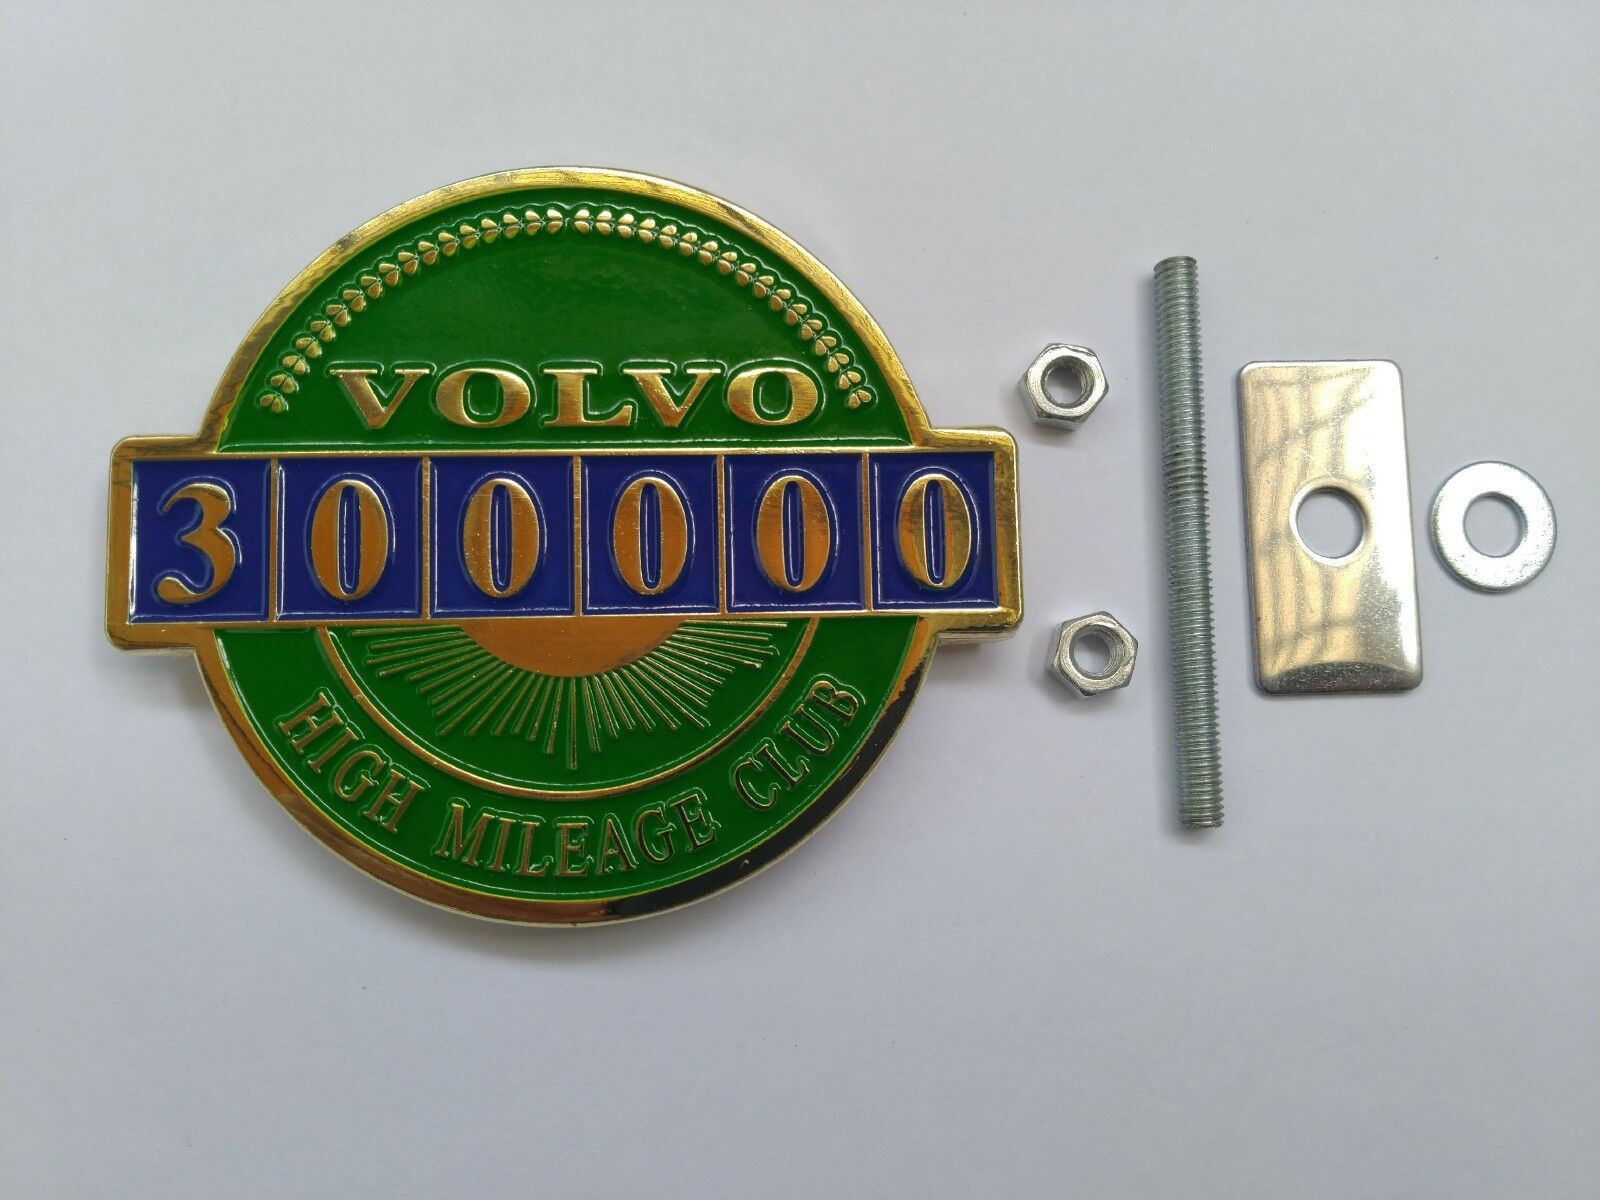 volvo emblem 300k high mileage club grille s40 s60 850 s70 s80 240 940 v90